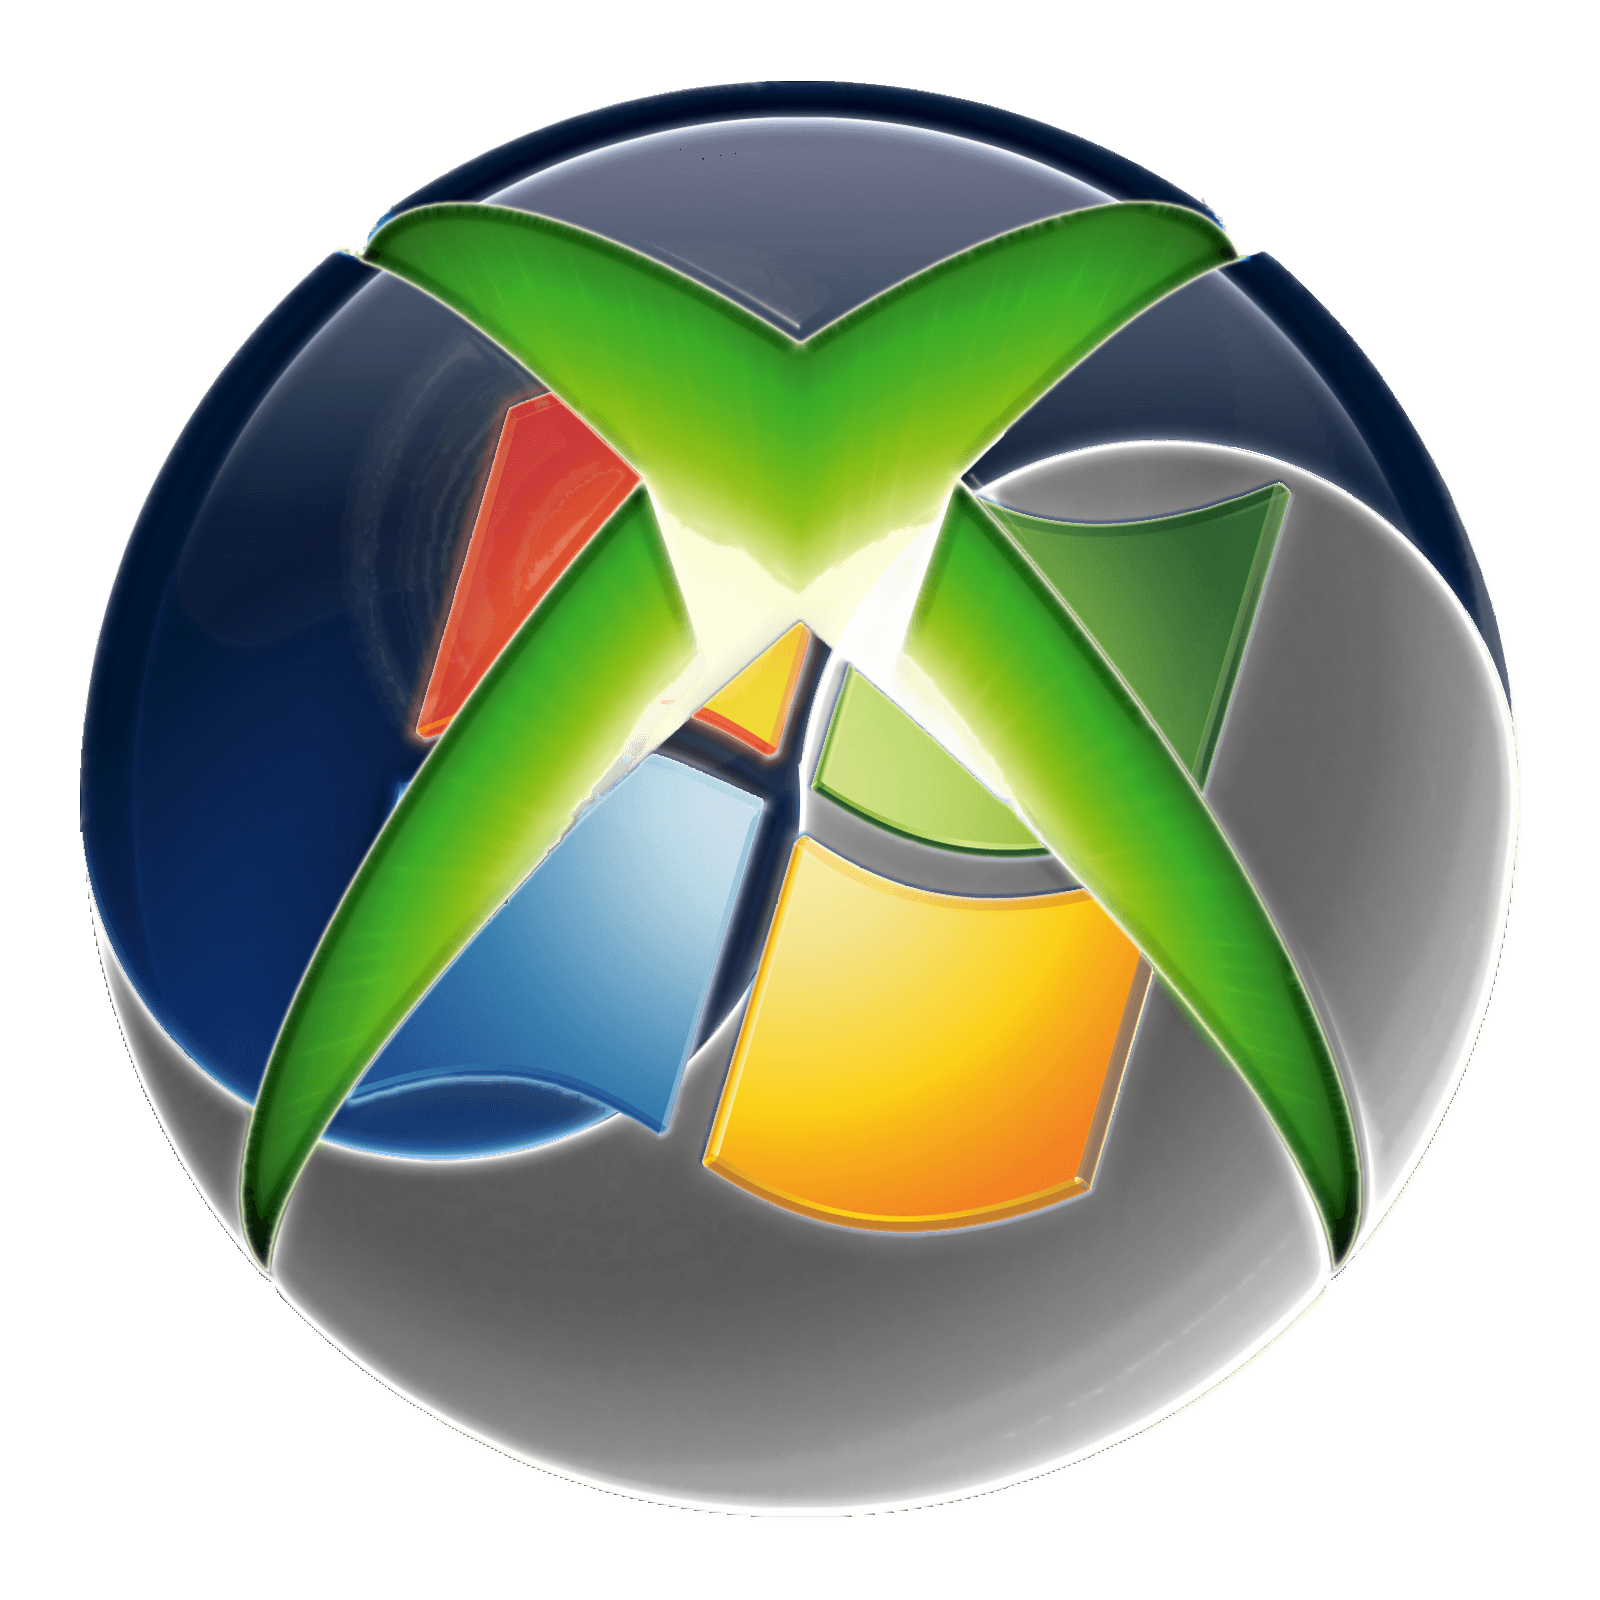 Xbox Logo - Classic Shell • View topic - xbox logo?